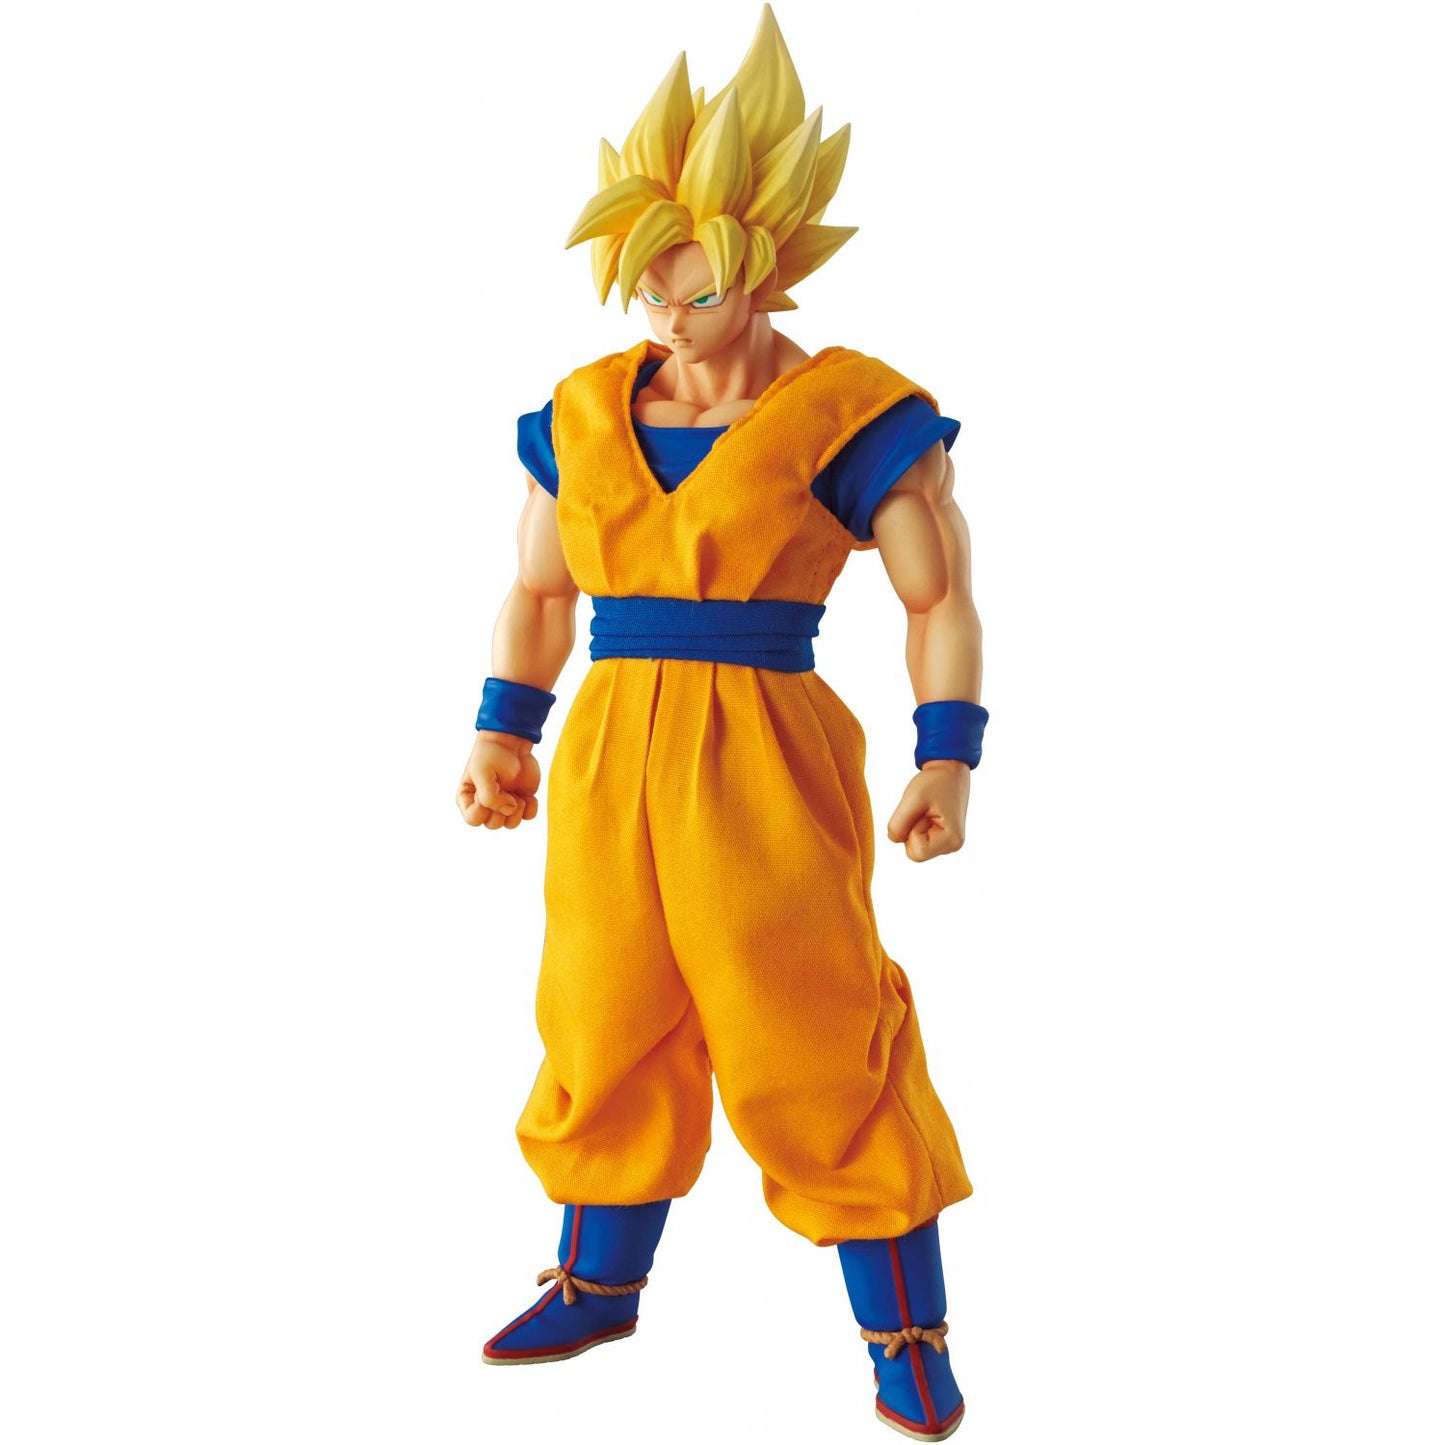 Dimension of DRAGONBALL Super Saiyan Son Goku